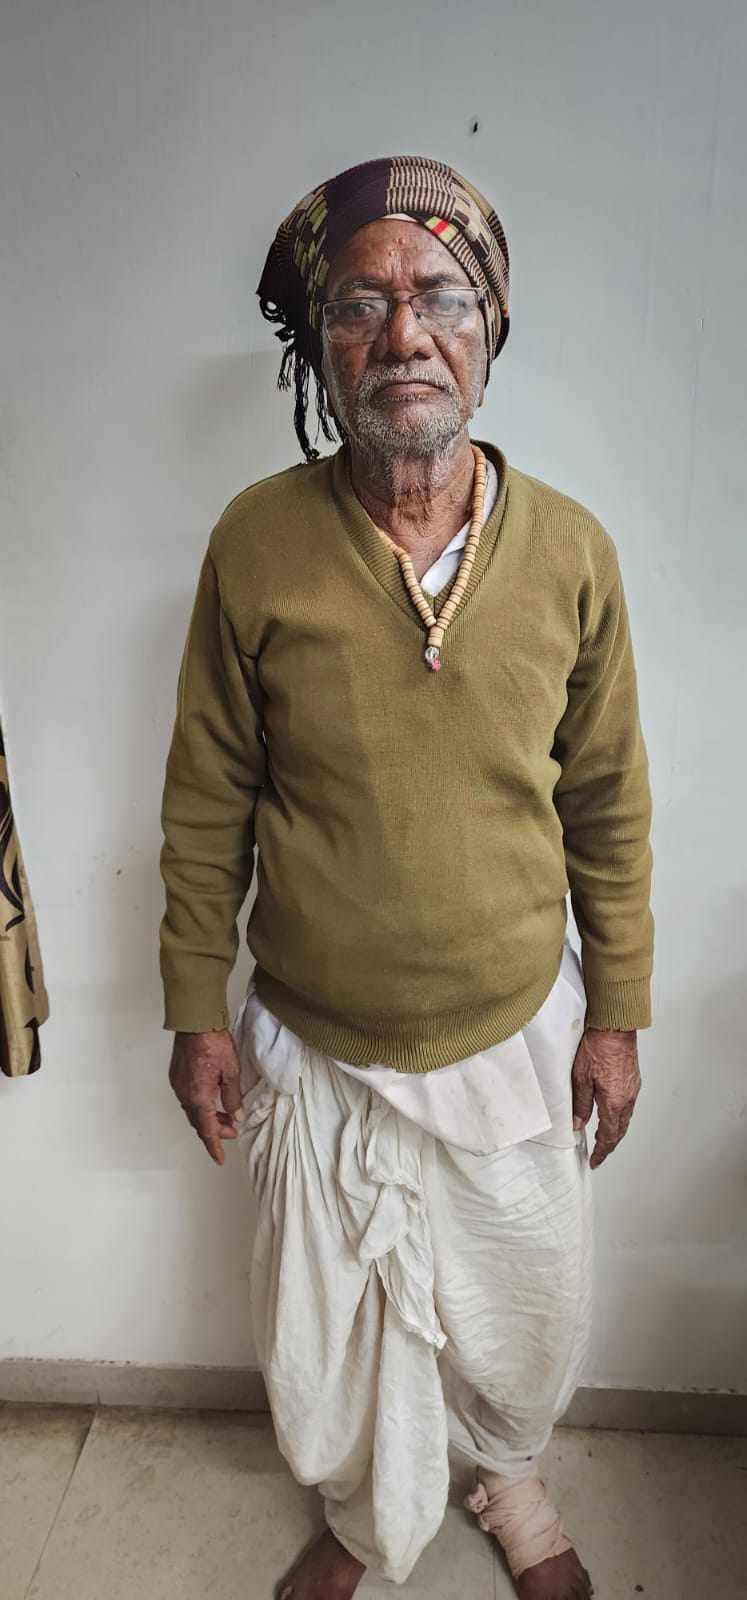 Sitaram Bhatane, 76, is accused of murdering widow Mani Shukla, 70, when he was 27. Photo: Handout 